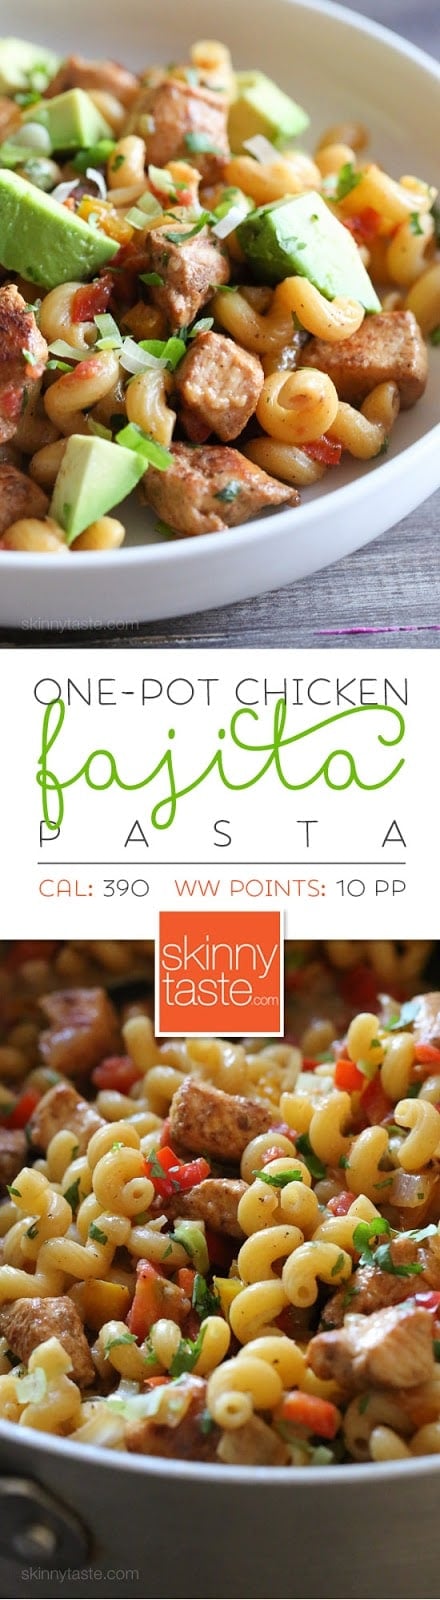 One-Pot Chicken Fajita Pasta – an easy Mexican inspired pasta dish!